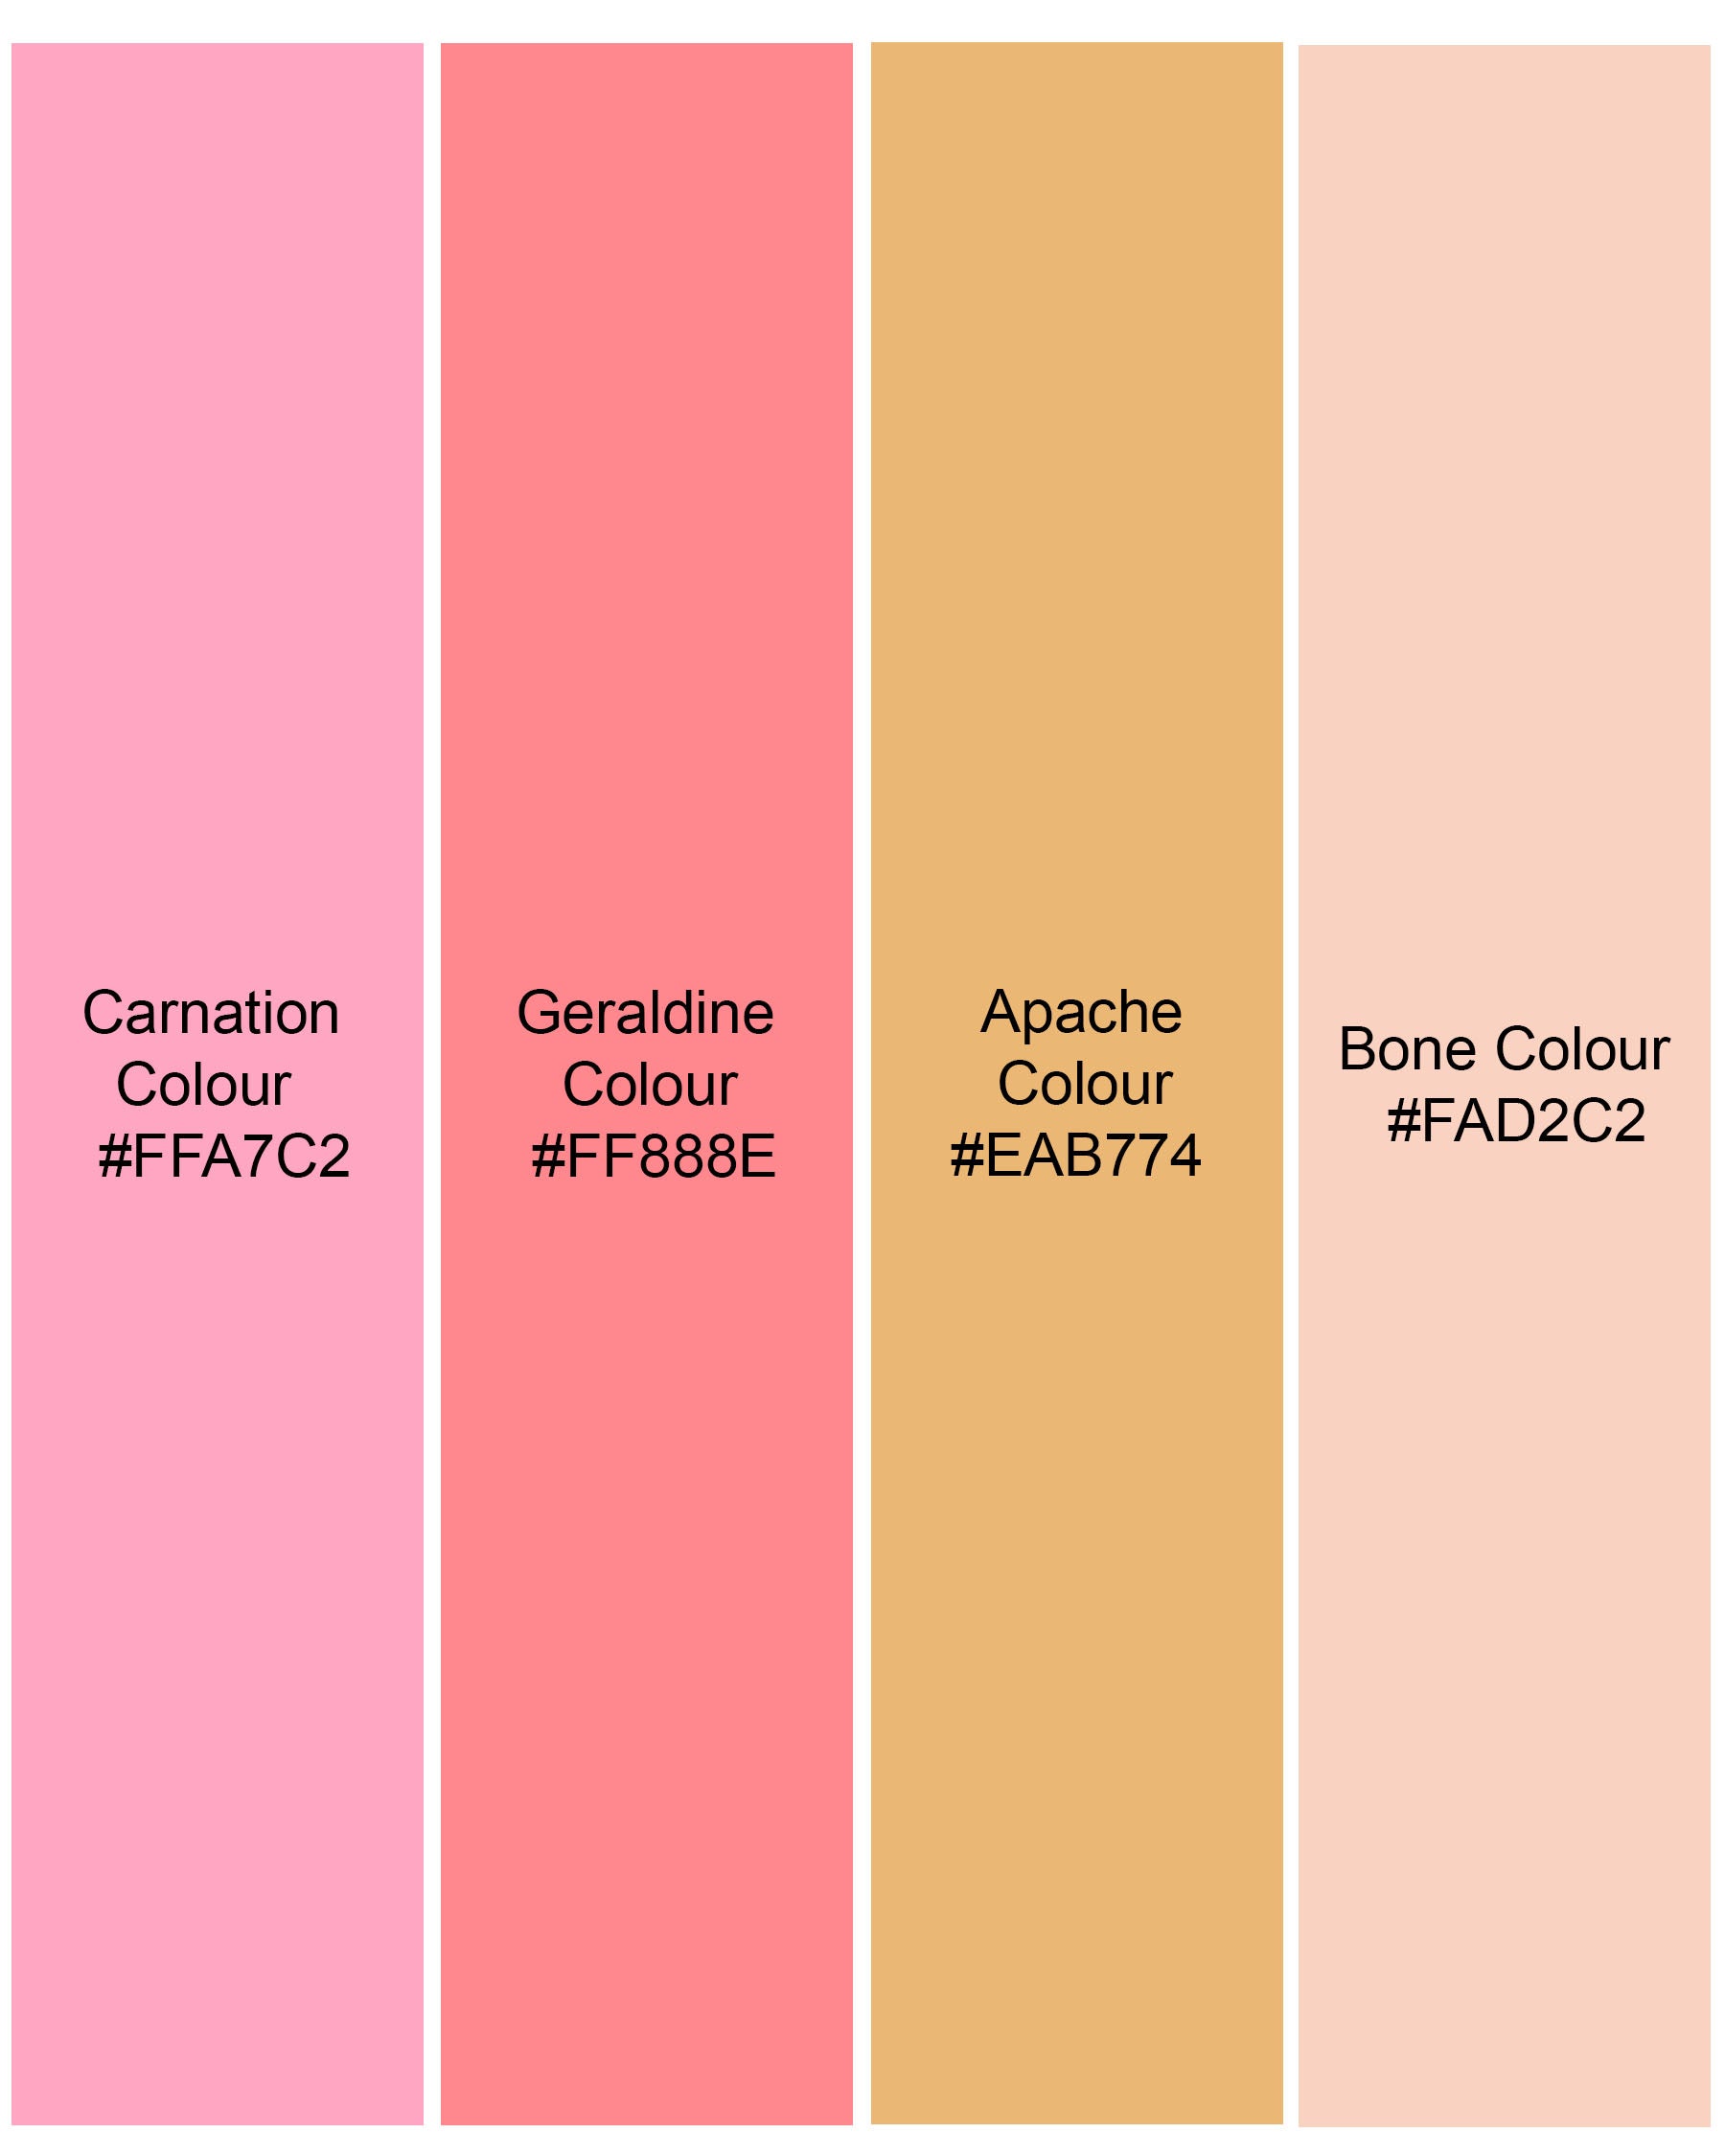 Carnation Pink and Bone Peach Multicolour Striped Premium Cotton Shirt 7953-BD-BLE-38,7953-BD-BLE-H-38,7953-BD-BLE-39,7953-BD-BLE-H-39,7953-BD-BLE-40,7953-BD-BLE-H-40,7953-BD-BLE-42,7953-BD-BLE-H-42,7953-BD-BLE-44,7953-BD-BLE-H-44,7953-BD-BLE-46,7953-BD-BLE-H-46,7953-BD-BLE-48,7953-BD-BLE-H-48,7953-BD-BLE-50,7953-BD-BLE-H-50,7953-BD-BLE-52,7953-BD-BLE-H-52